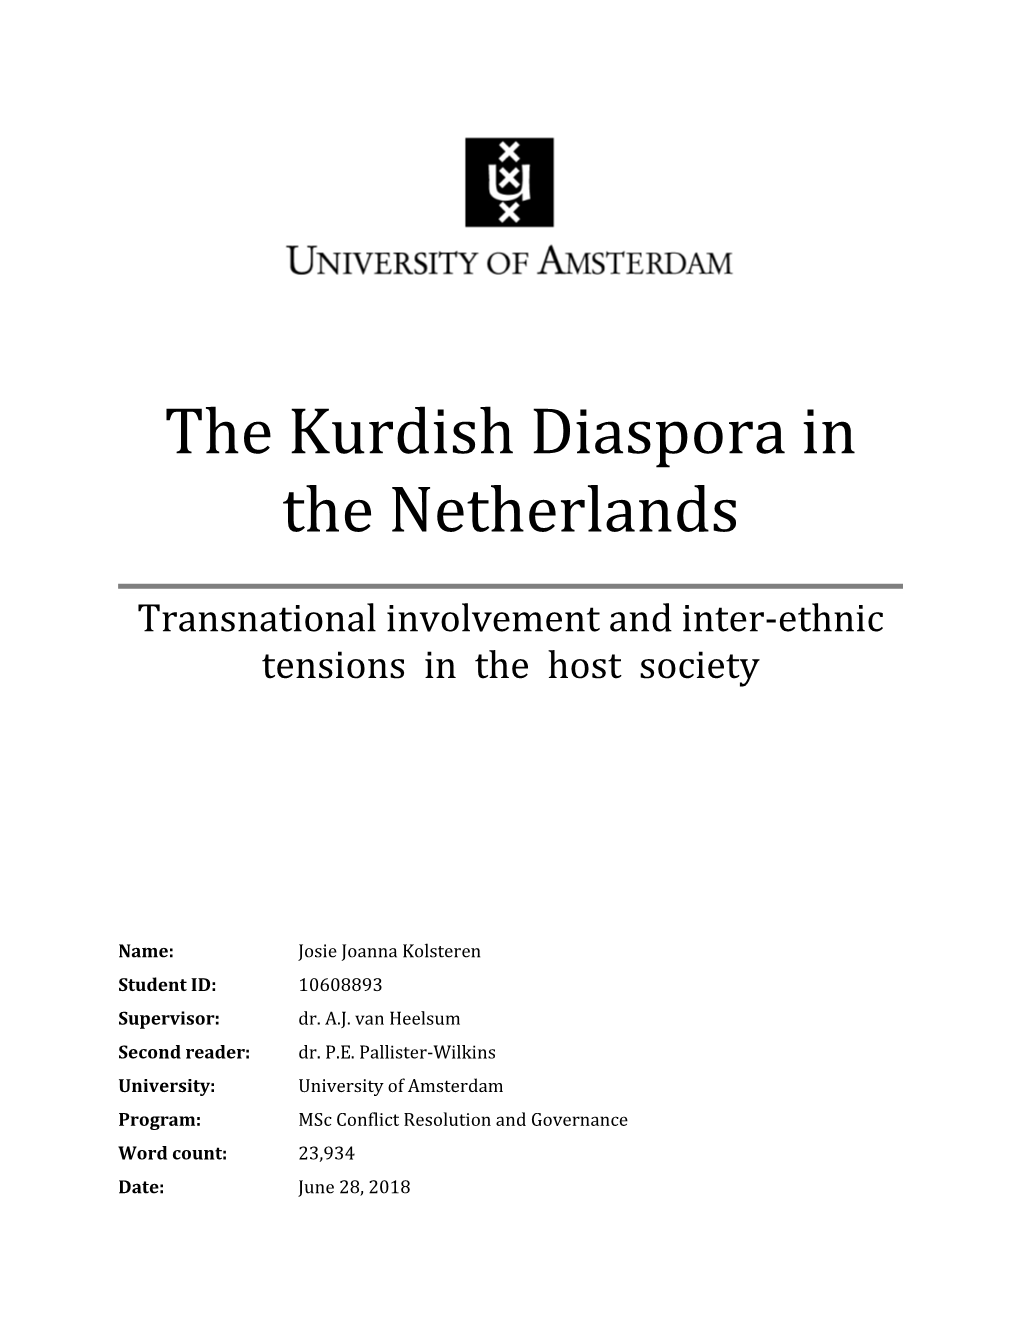 The Kurdish Diaspora in the Netherlands